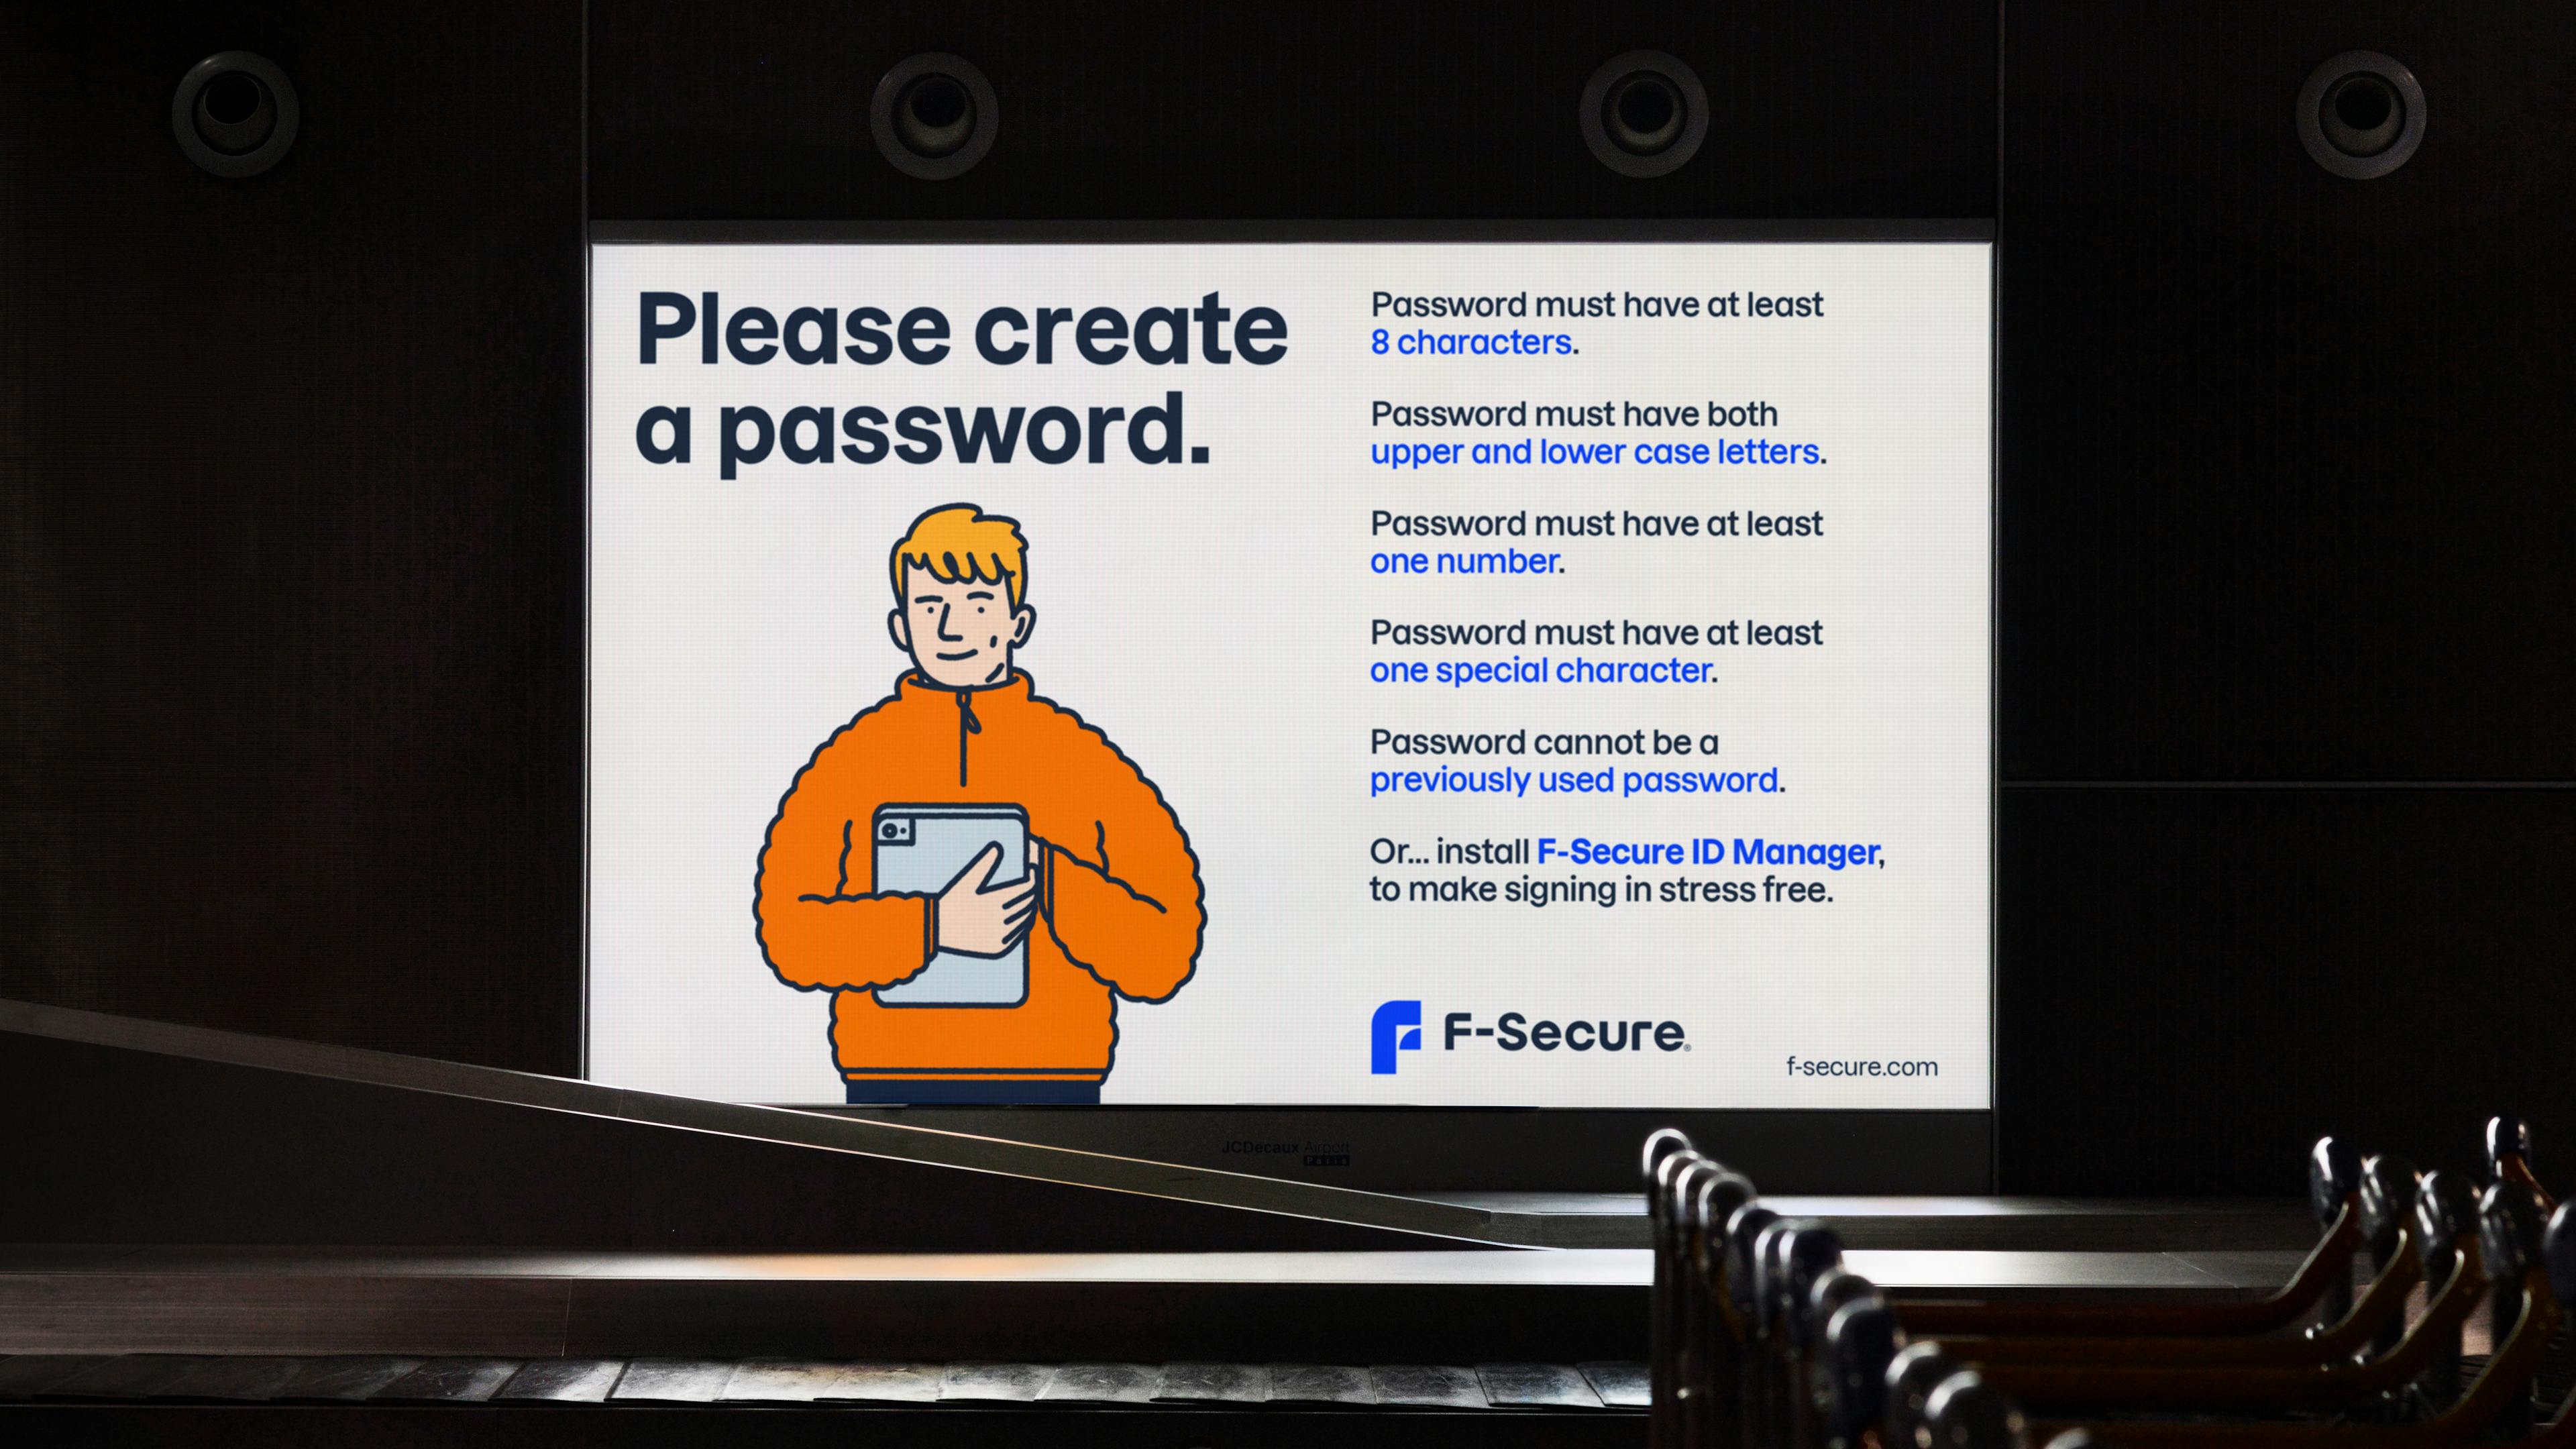 f-secure-password-billboard-16.9